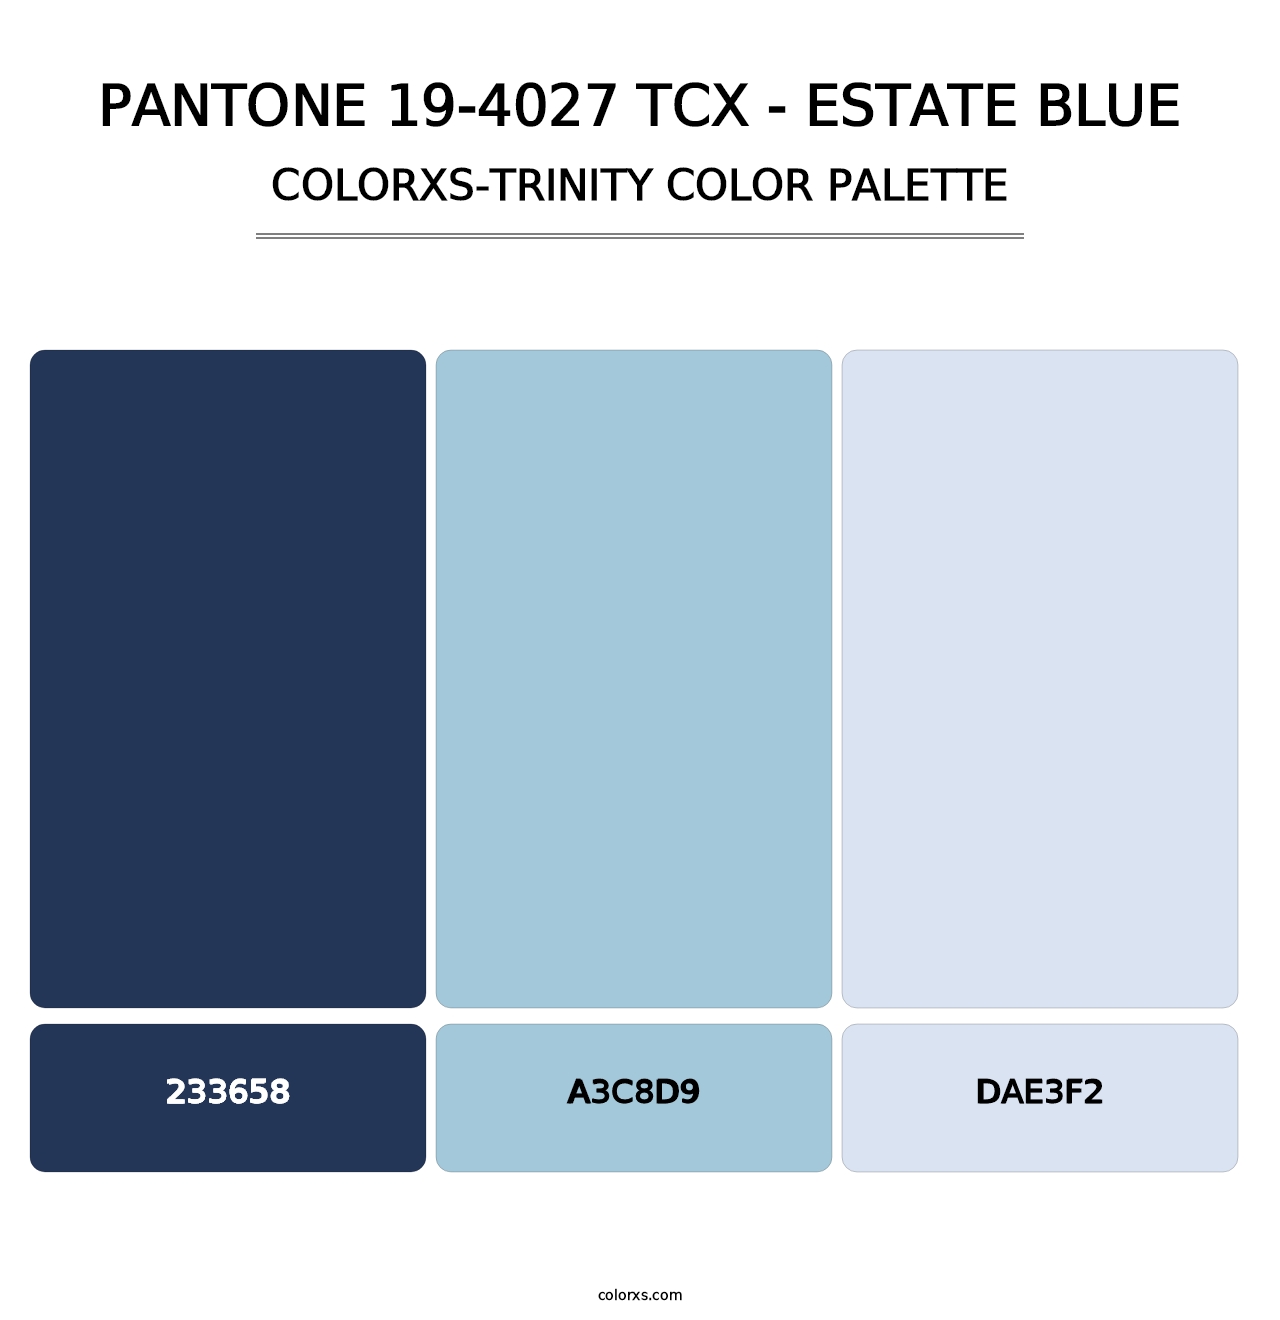 PANTONE 19-4027 TCX - Estate Blue - Colorxs Trinity Palette